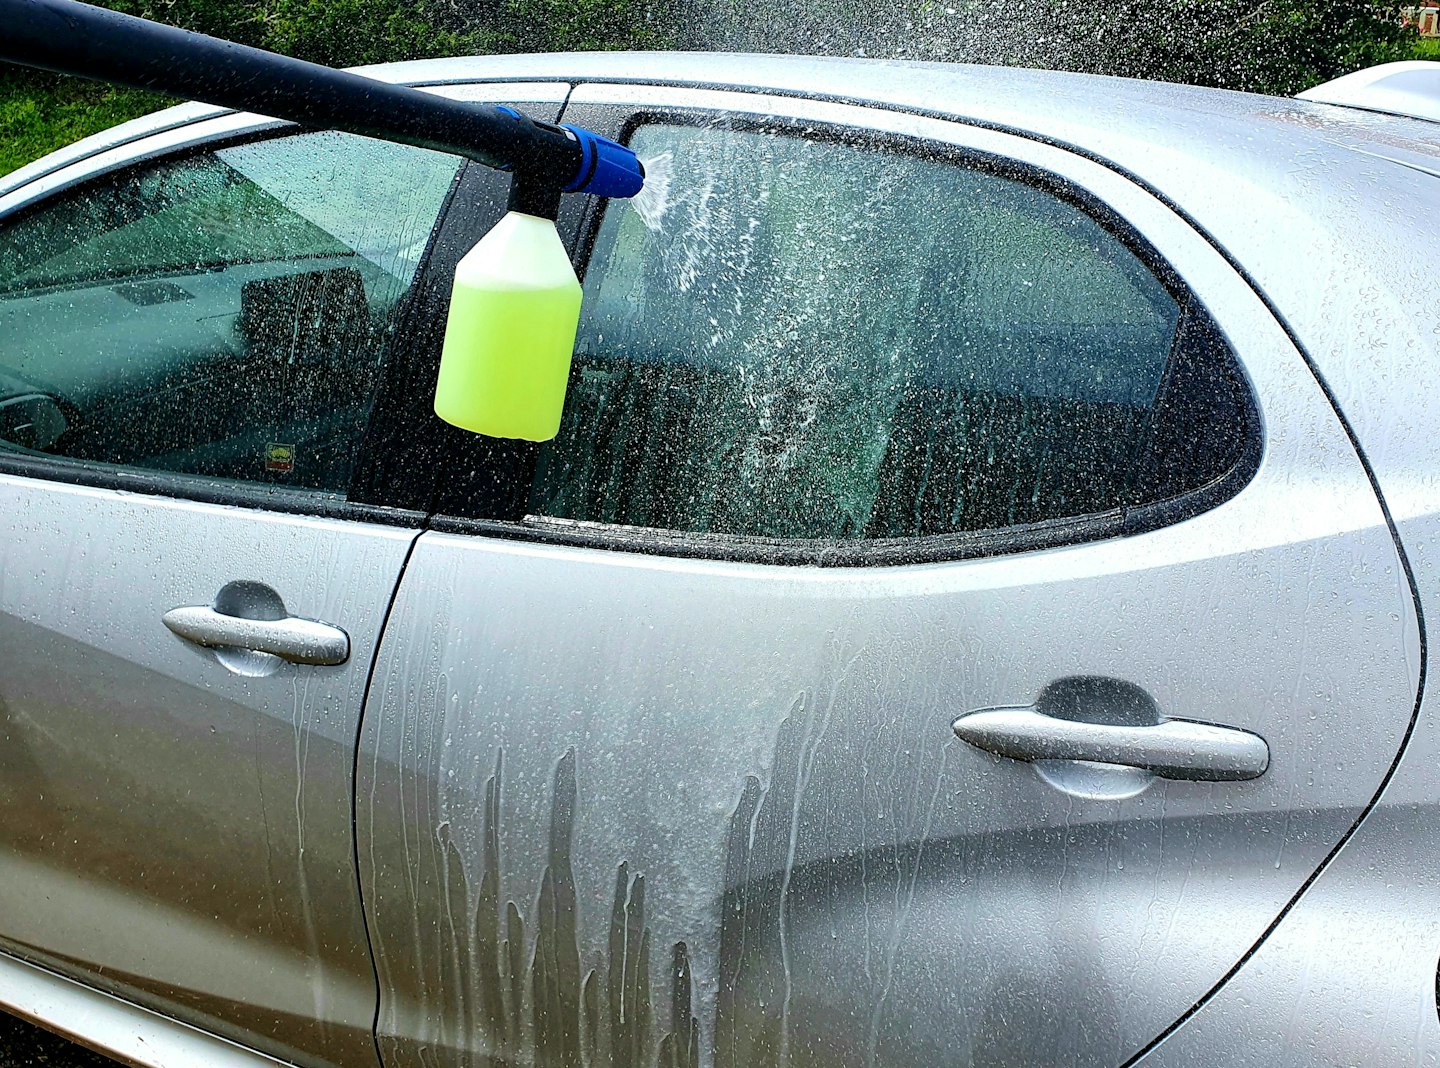 Nilfisk foaming spray bottle and car